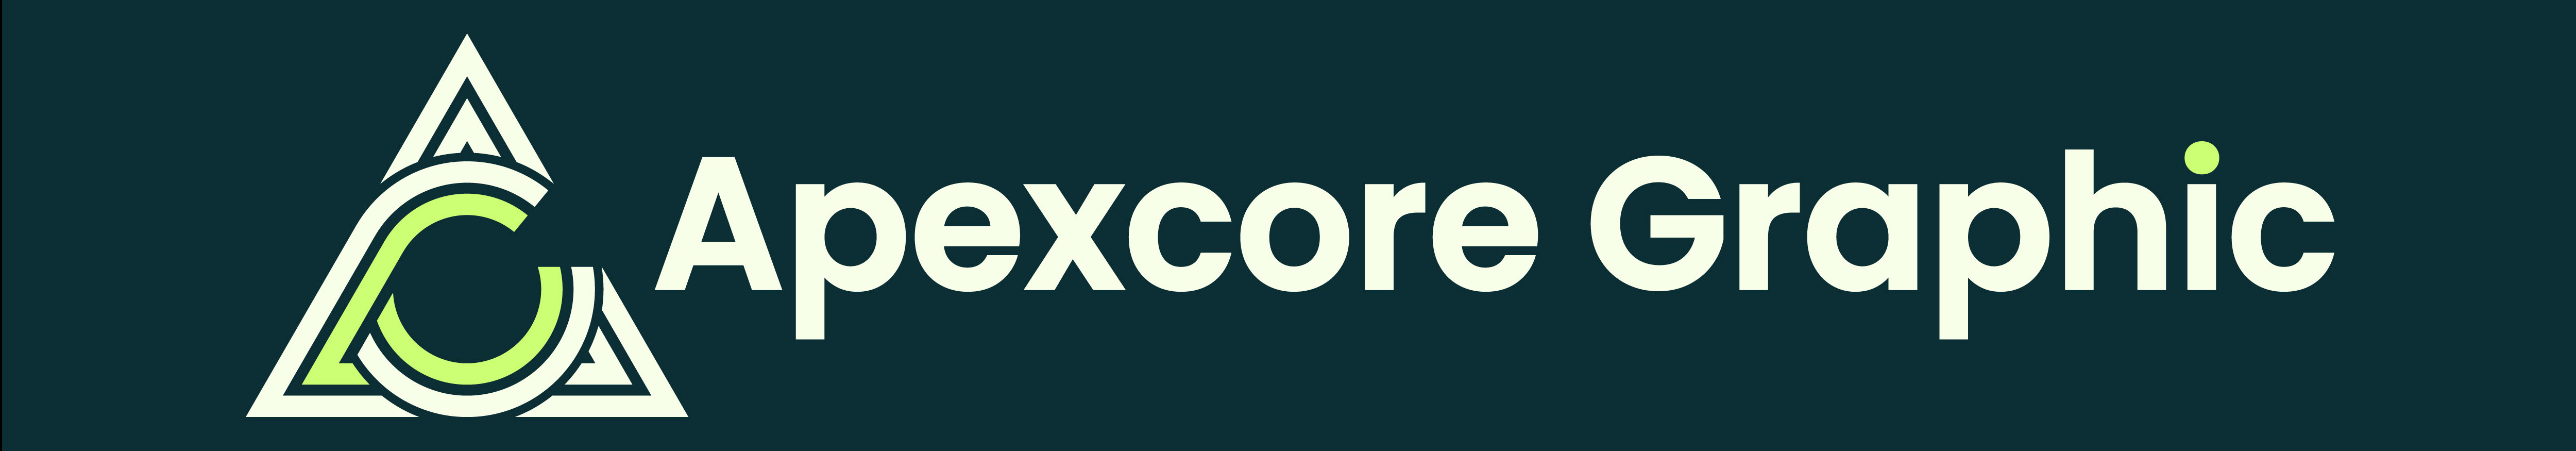 Apexcore Graphics profilbanner